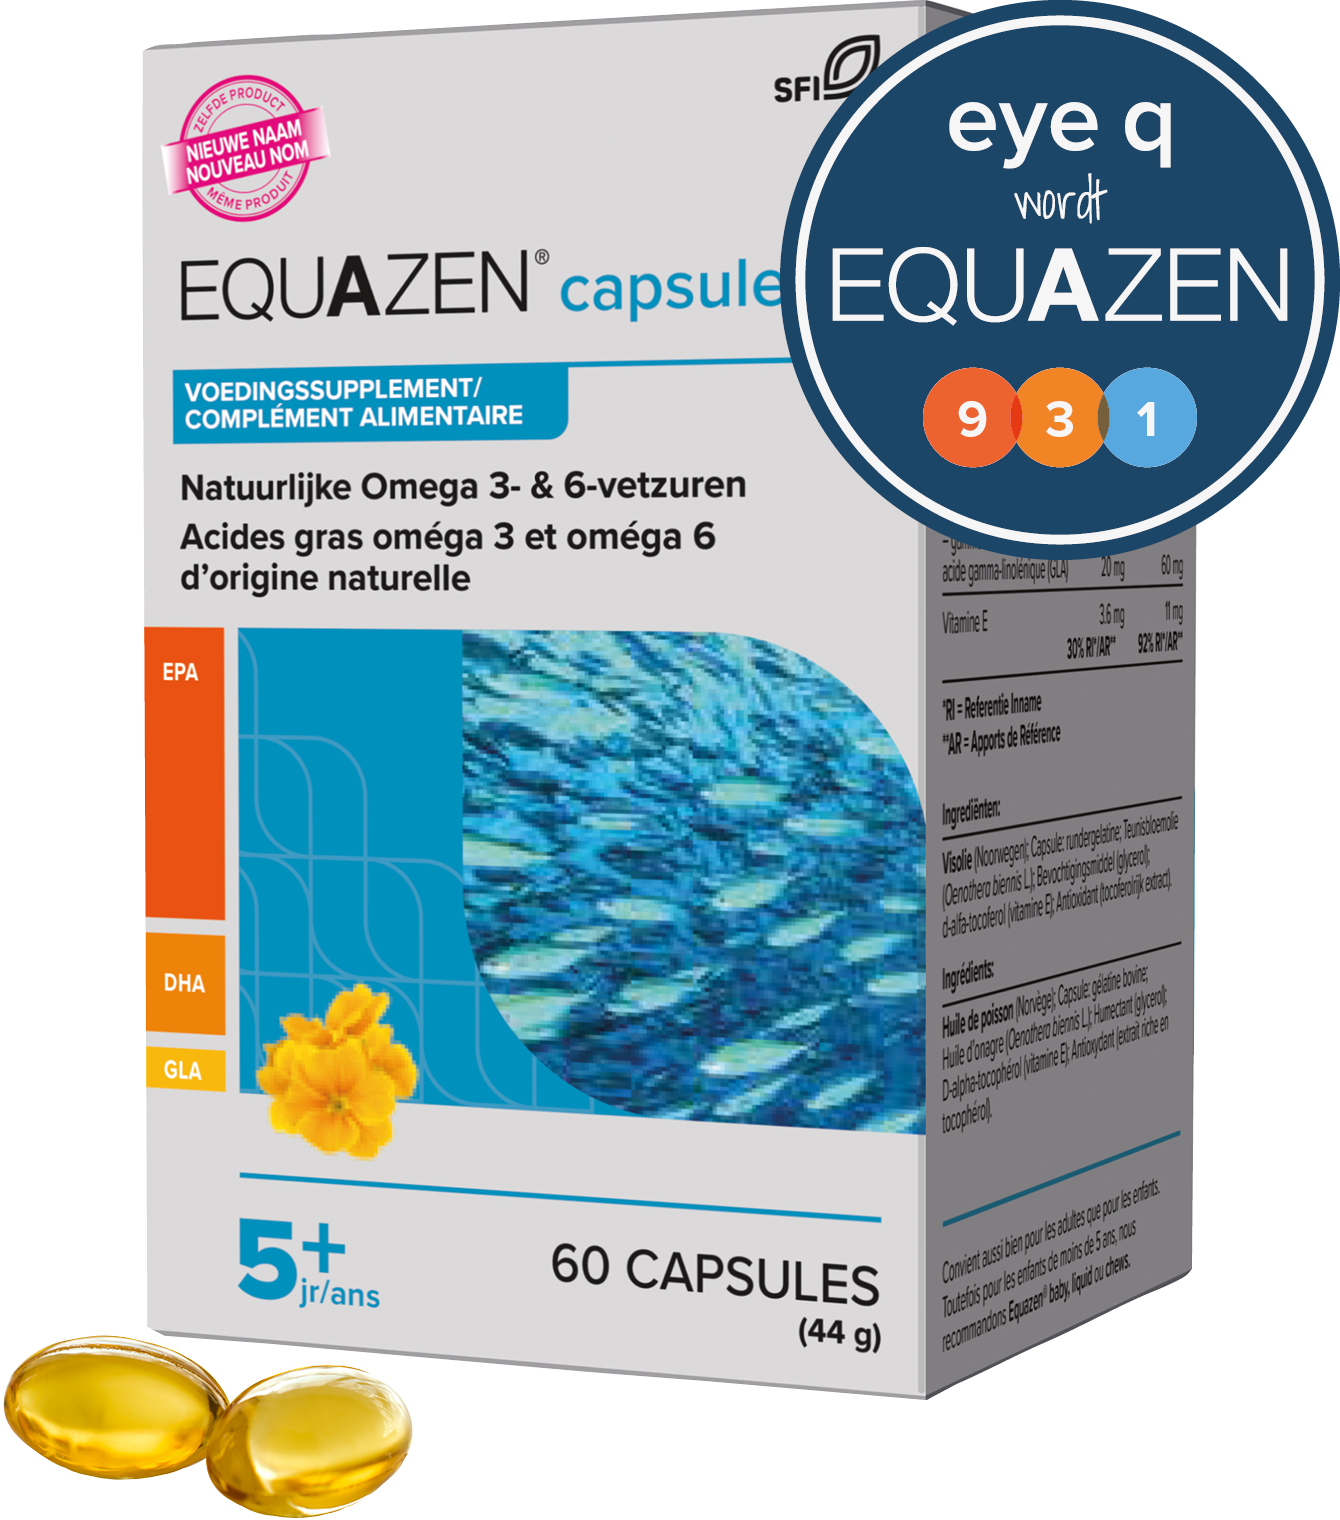 Equazen capsules 60 - omega 3- en 6-vetzuren EPA, DHA, GLA - Eye Q wordt Equazen